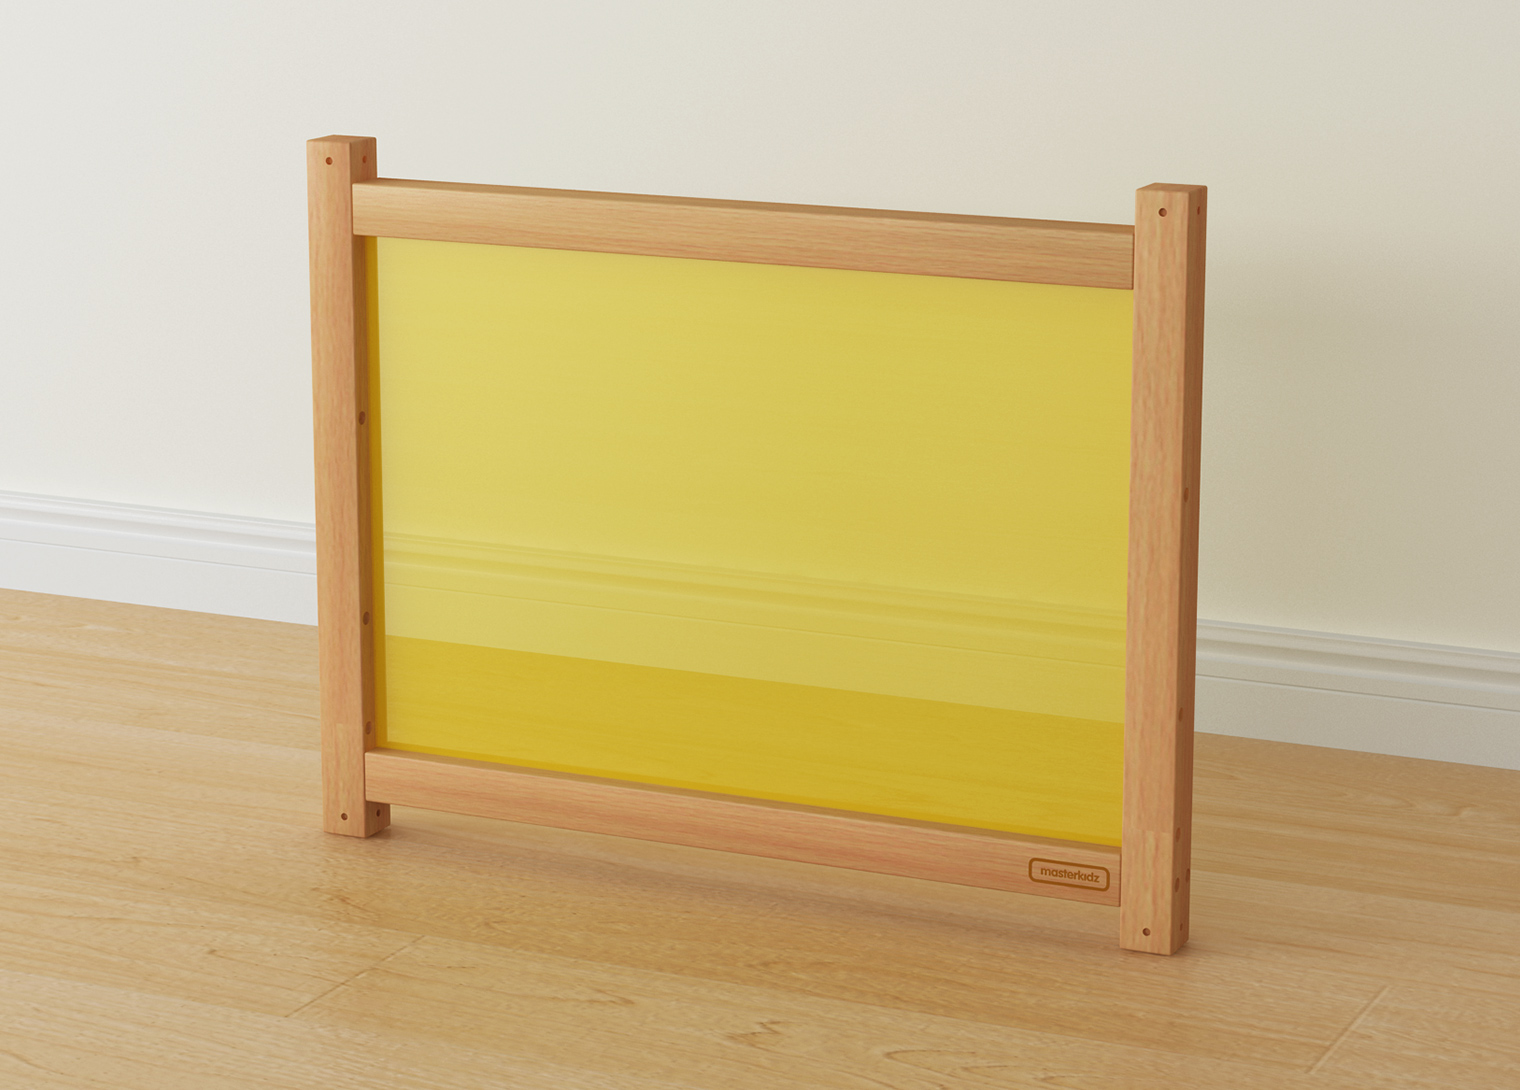 620H x 800L Divider Panel - Translucent Yellow